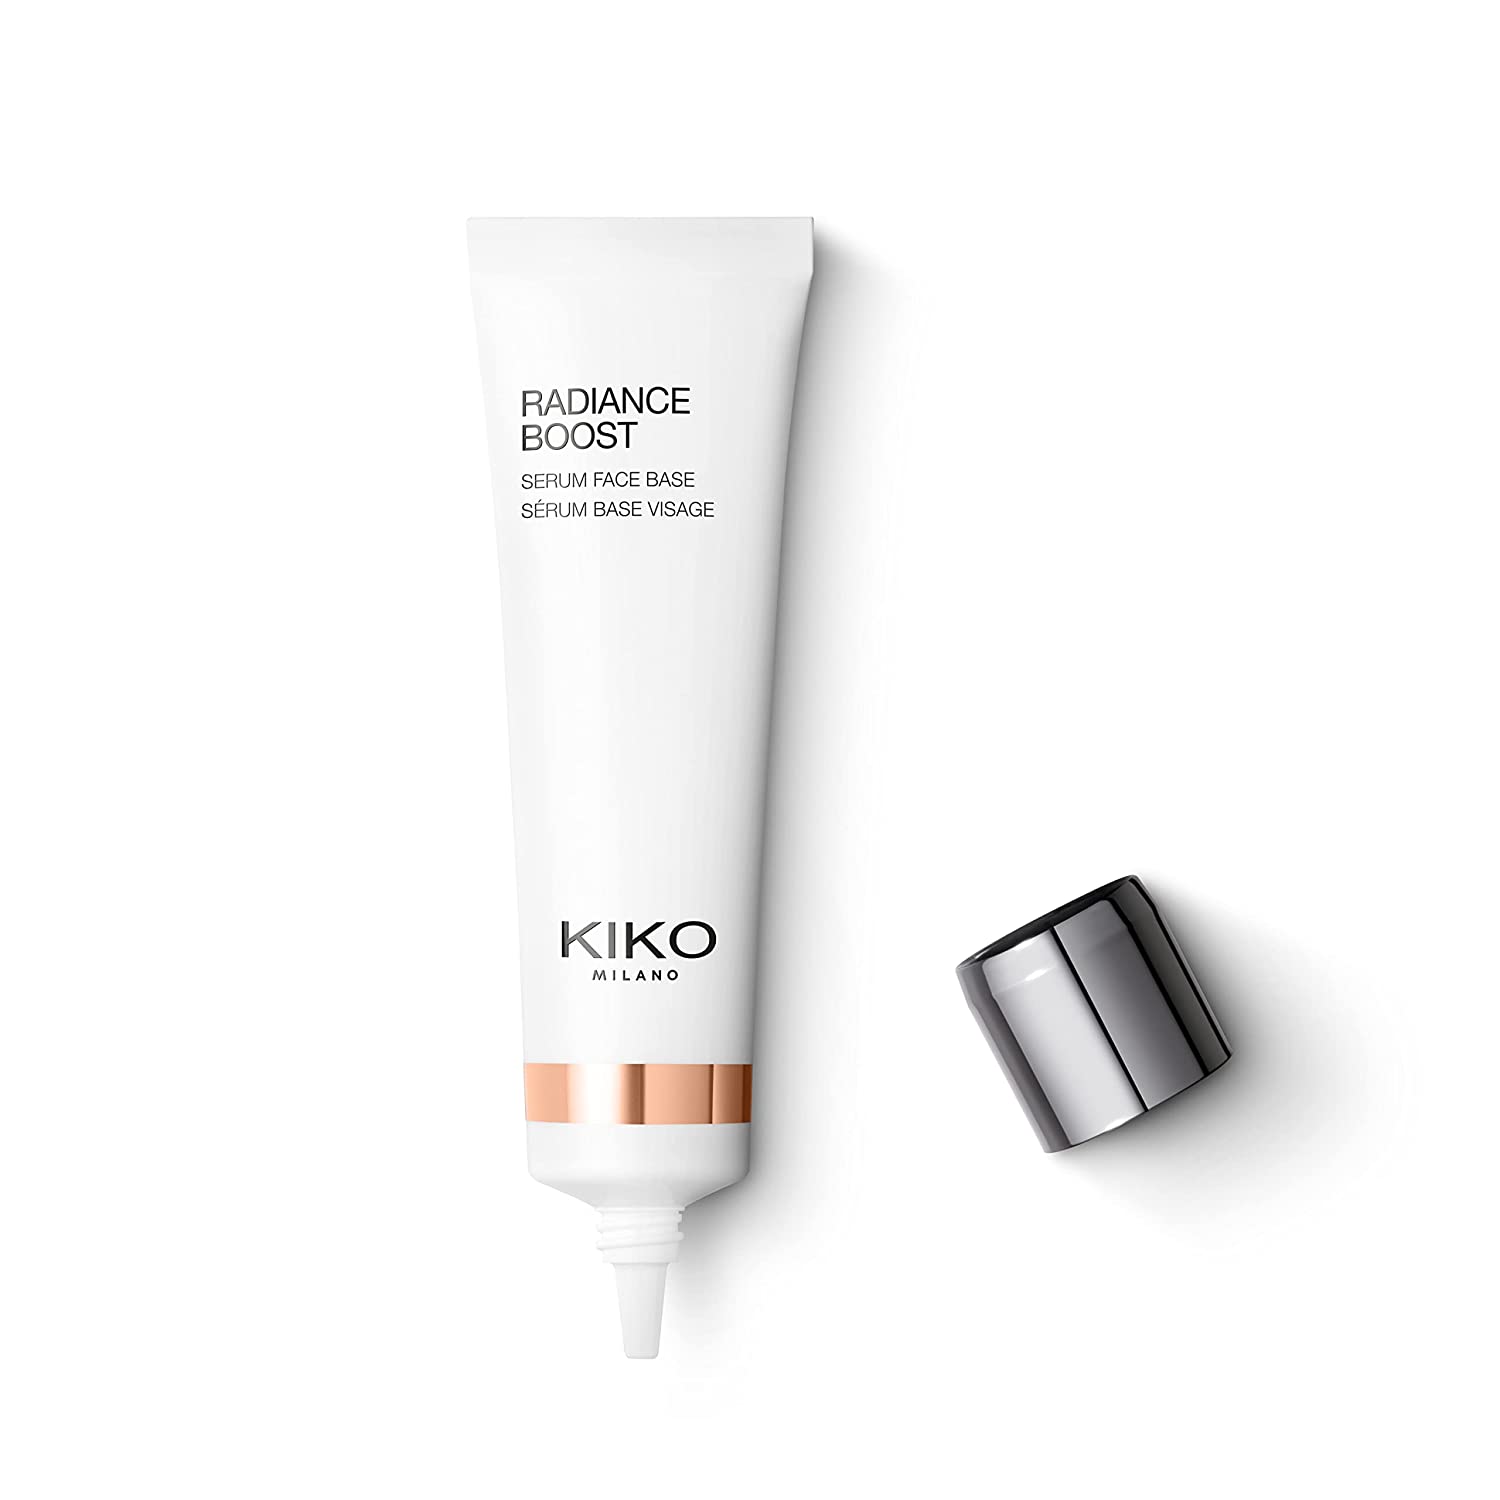 KIKO Milano Radiance Boost Serum Face Base Highlighting and Perfecting Face Base Serum